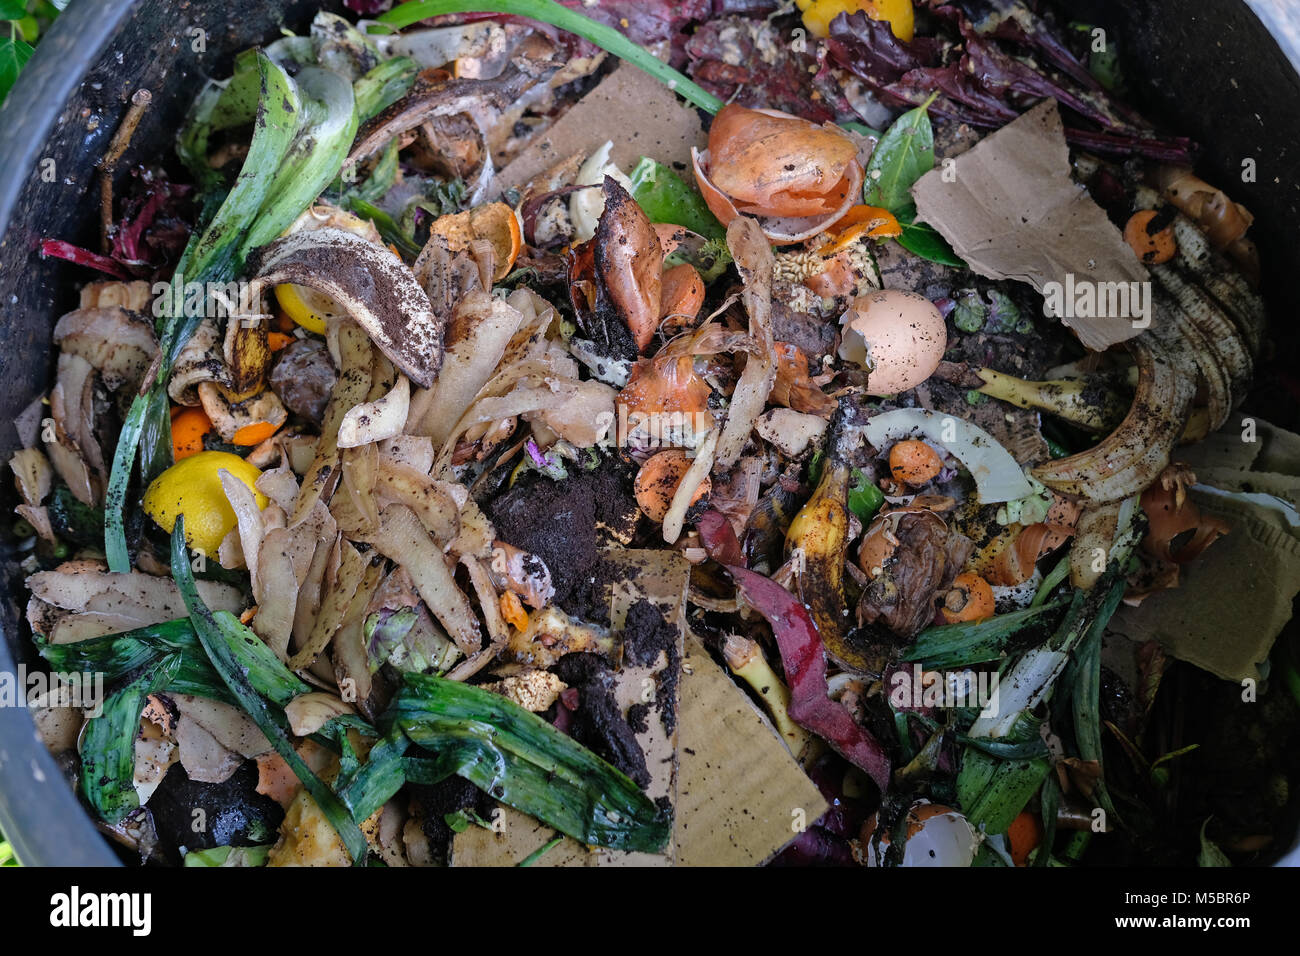 Compost bin. Stock Photo